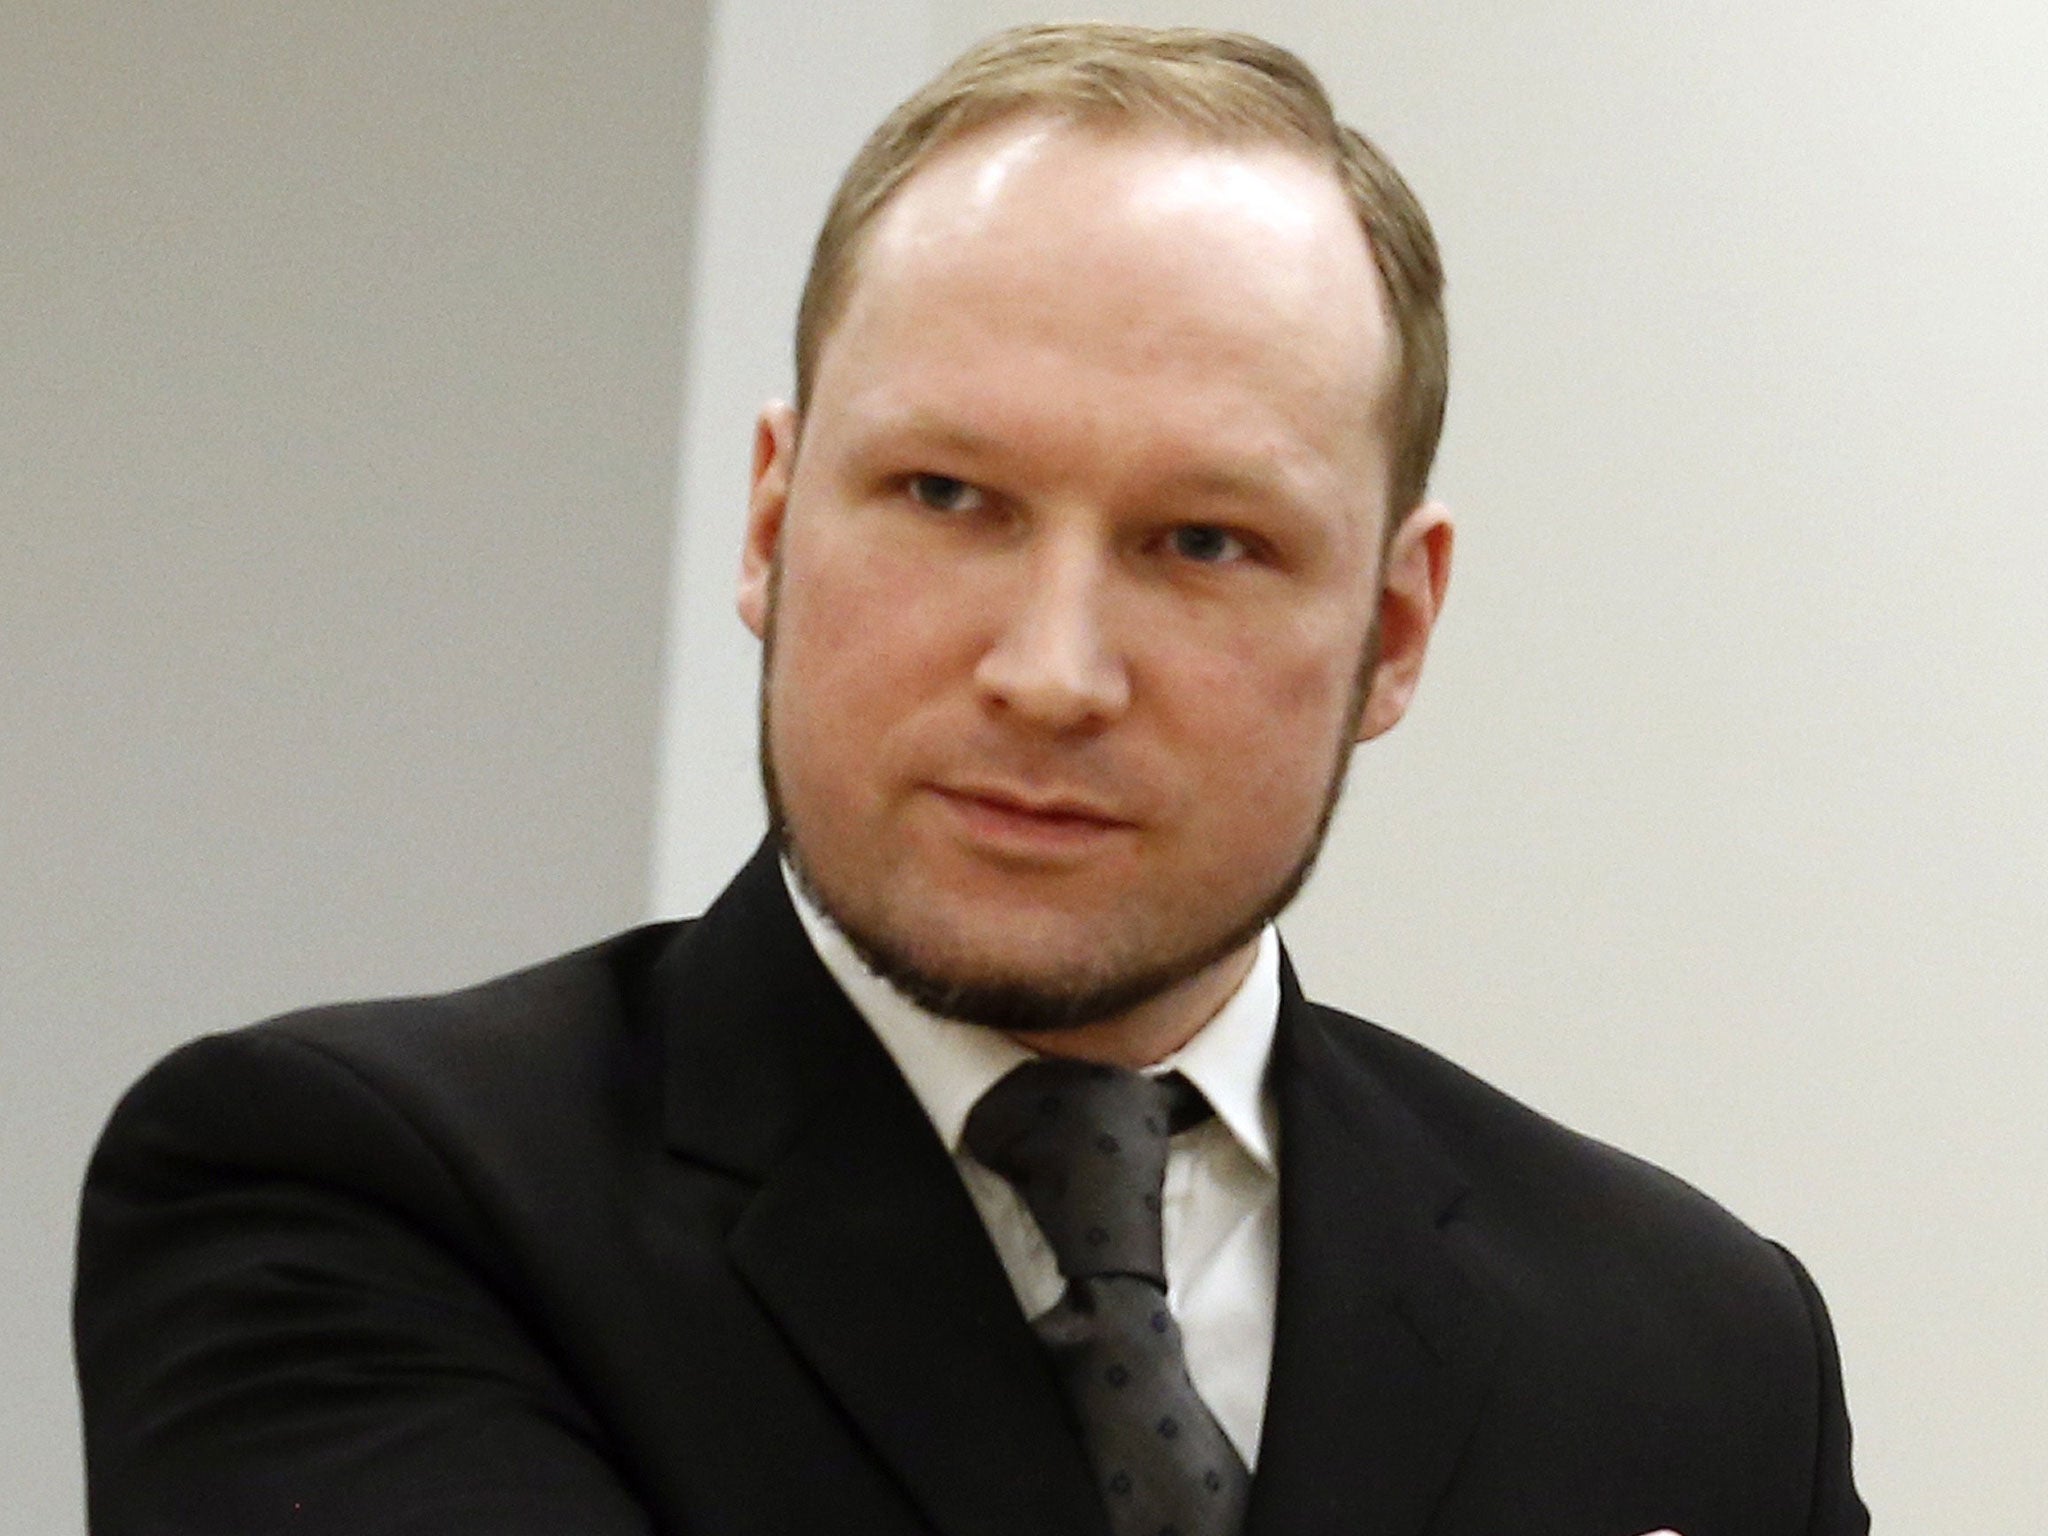 Breivik during his trial